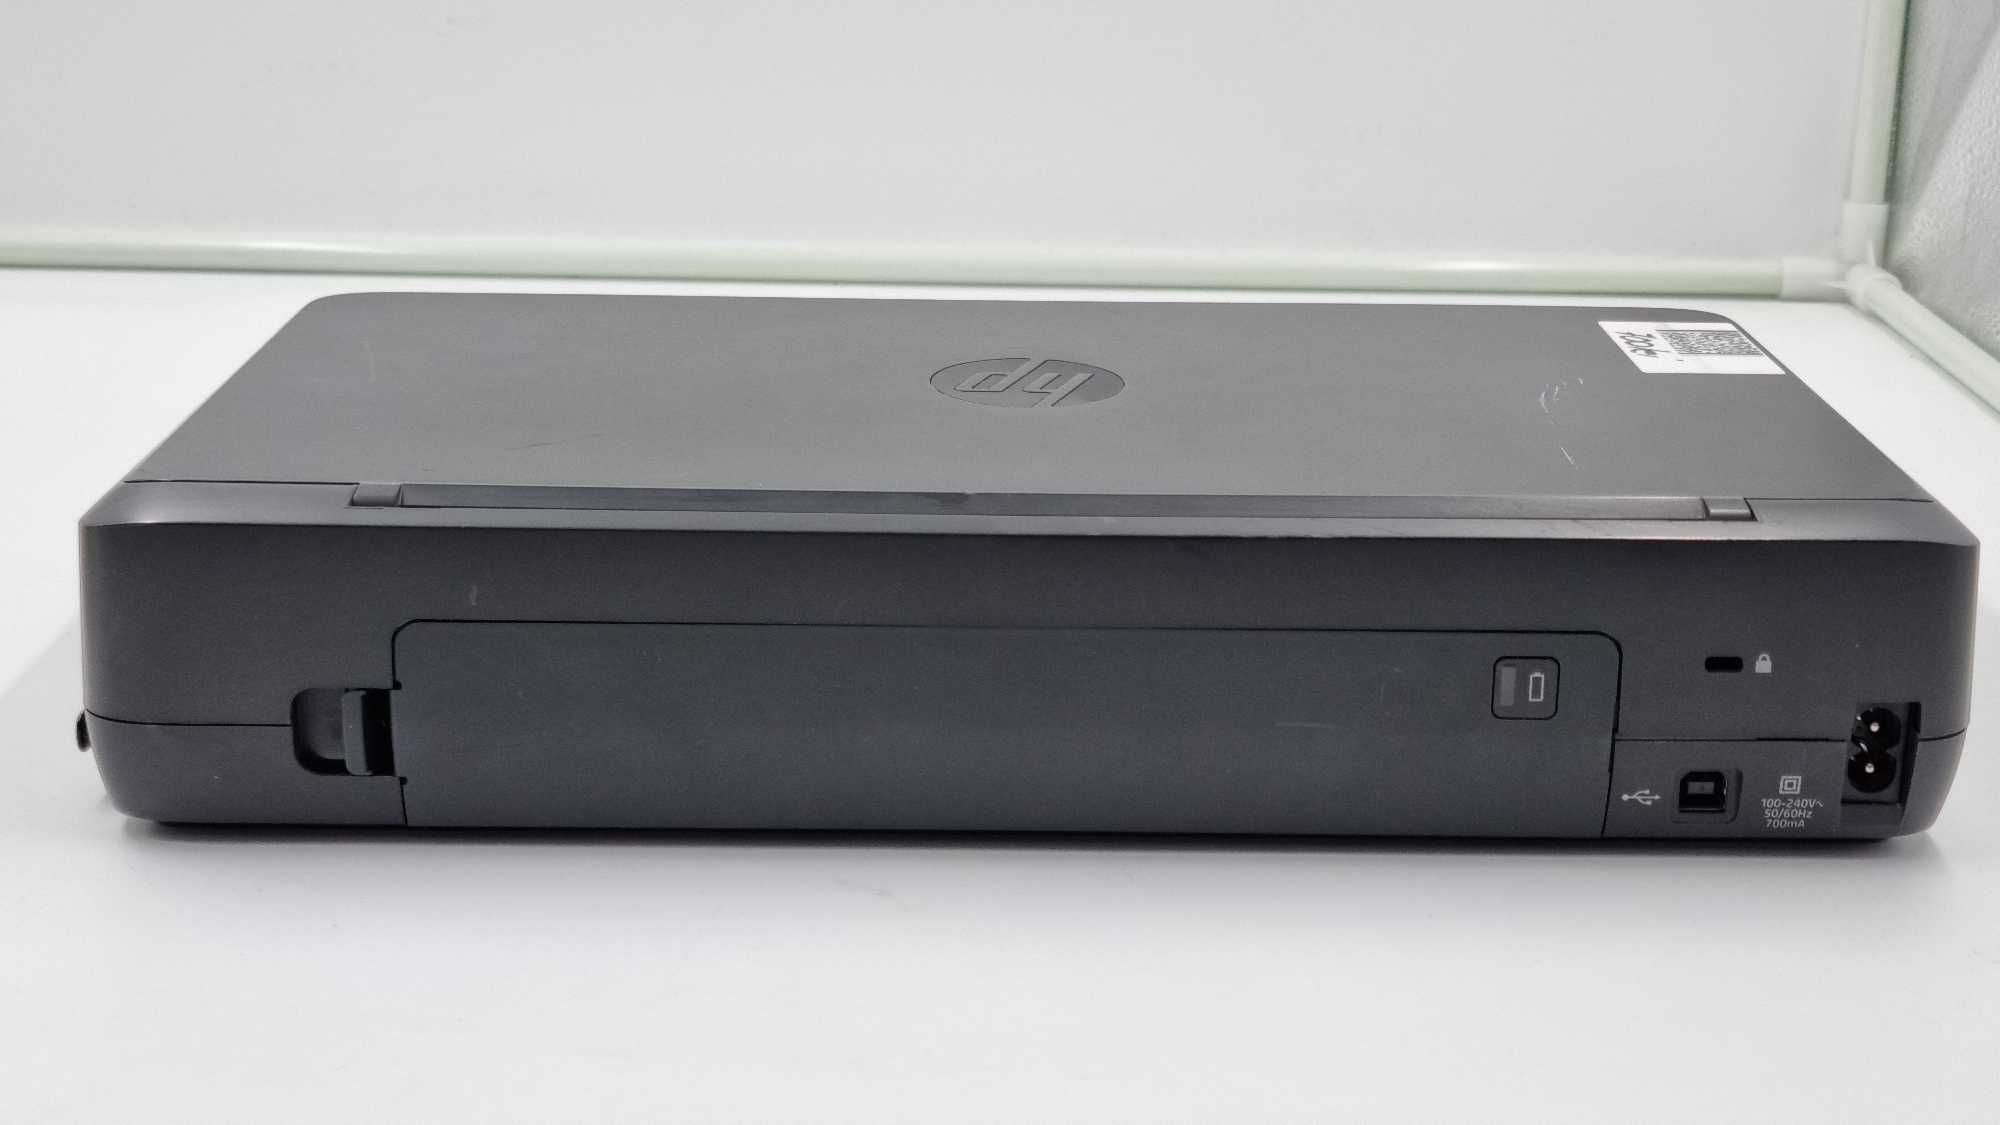 Amanet Club Caro Imprimanta color portabila HP OfficeJet 200, Wireless